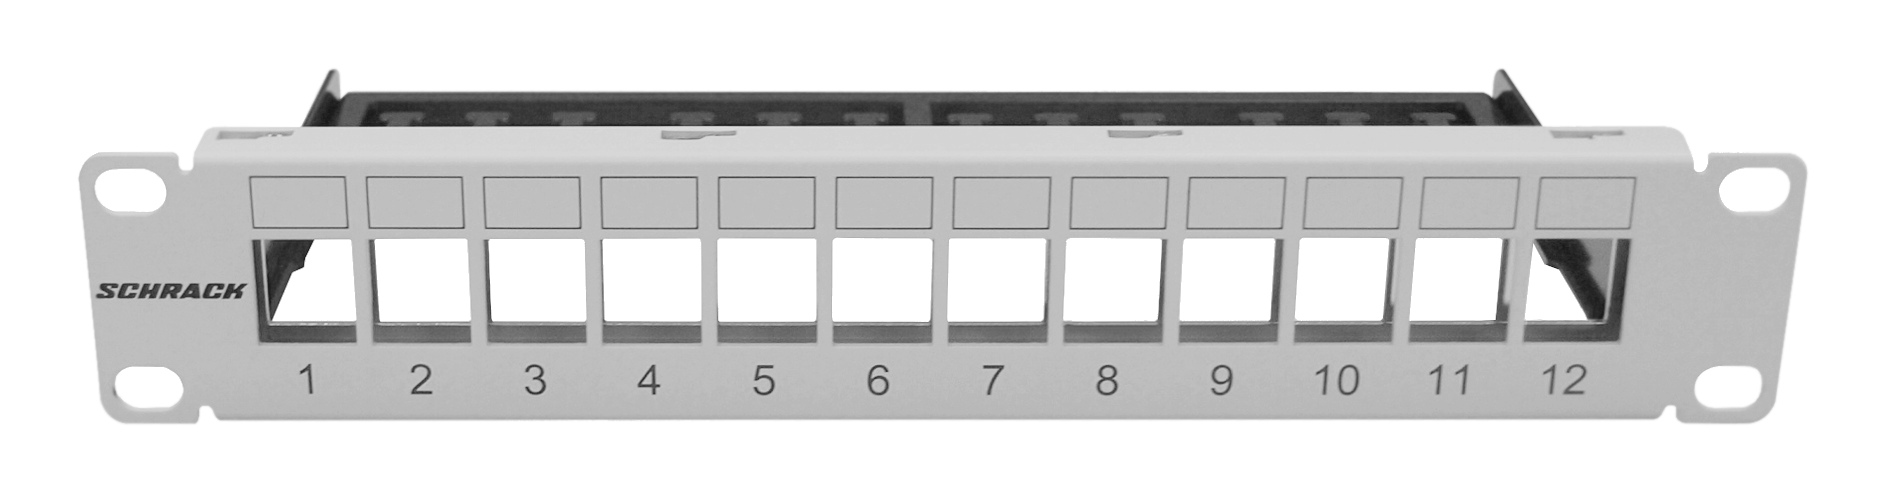 Patchpanel 10" leer für 12 Module (SFA)(SFB), 1HE, RAL7035